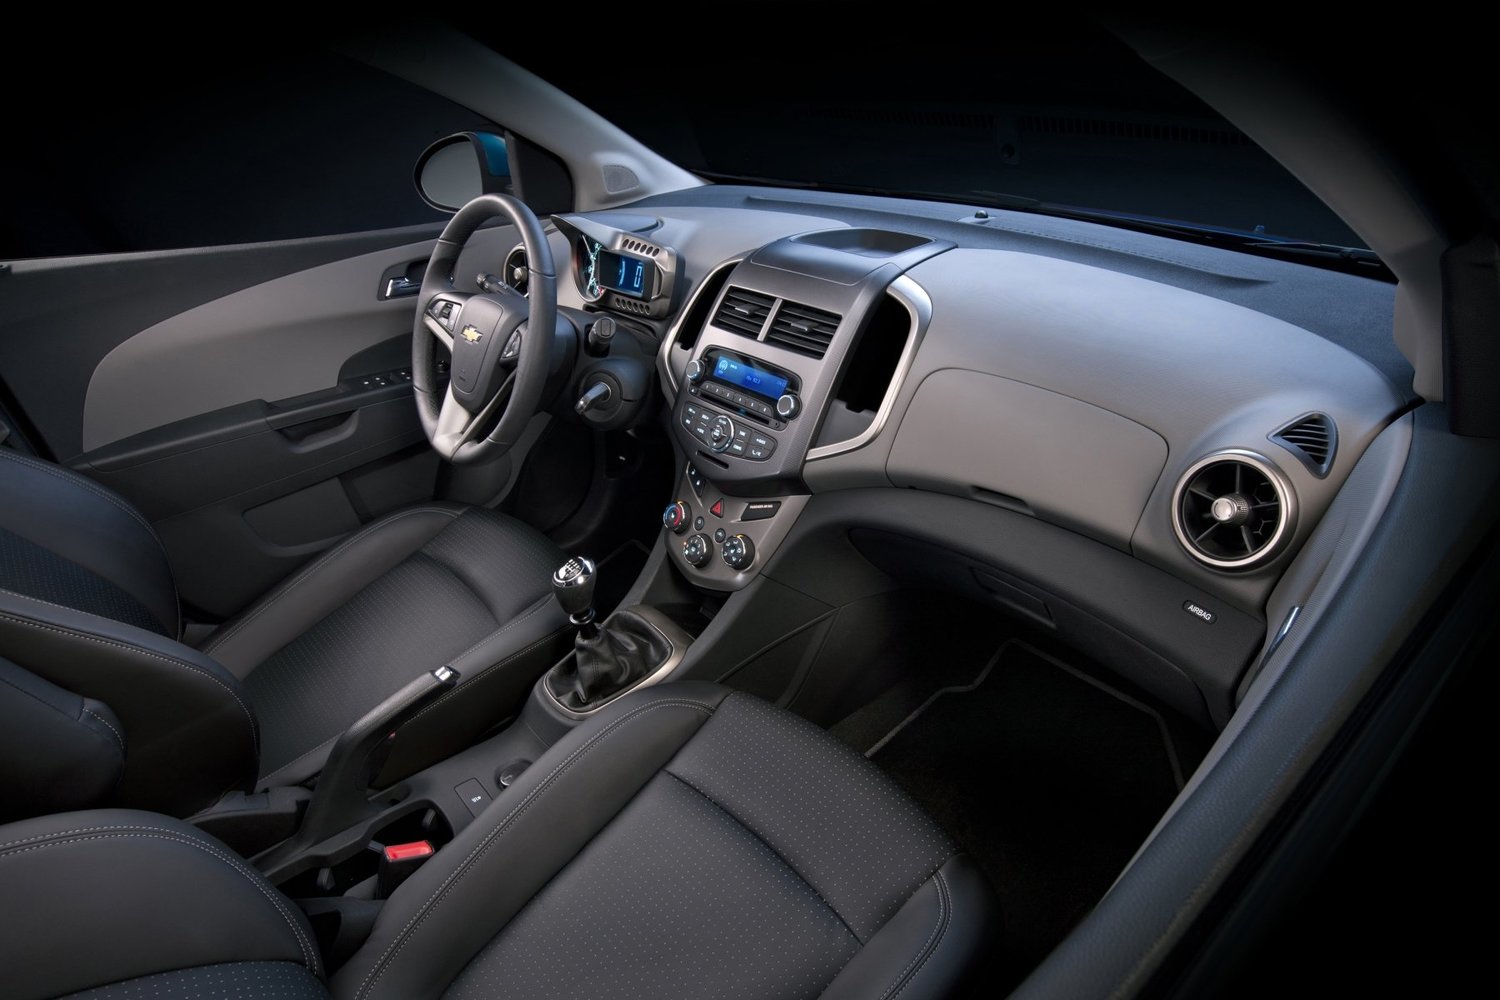 седан Chevrolet Aveo 2012 - 2016г выпуска модификация 1.2 MT (86 л.с.)